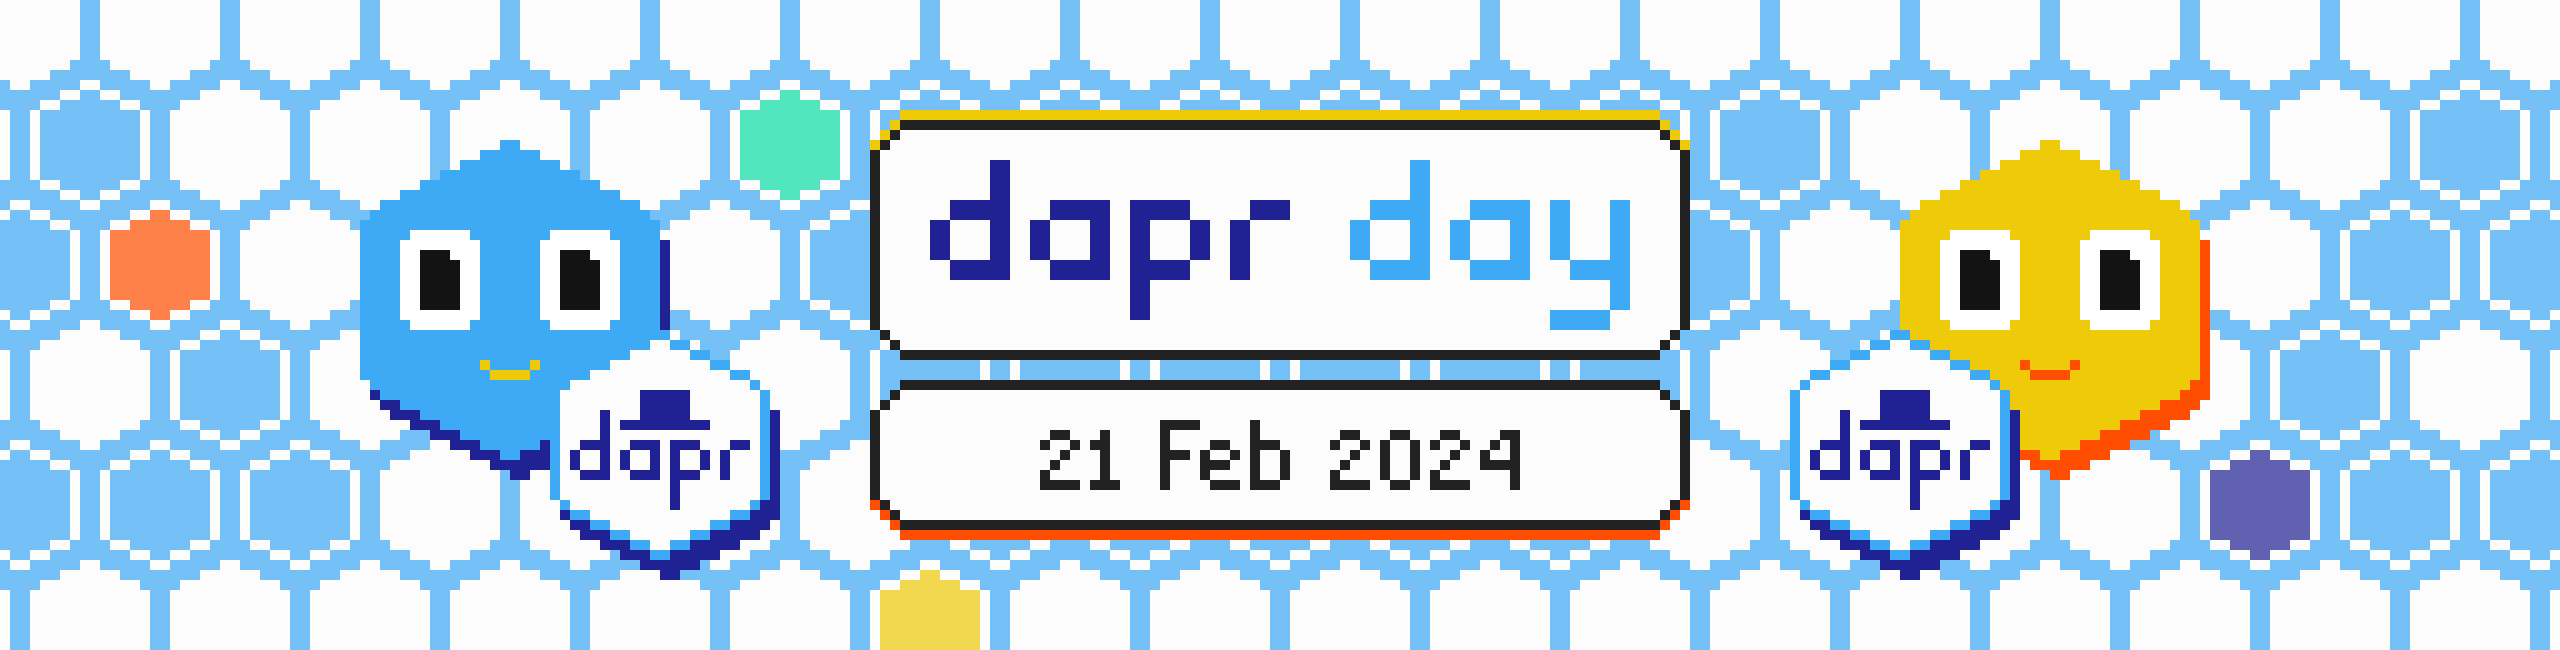 Organizing Dapr Day 2024